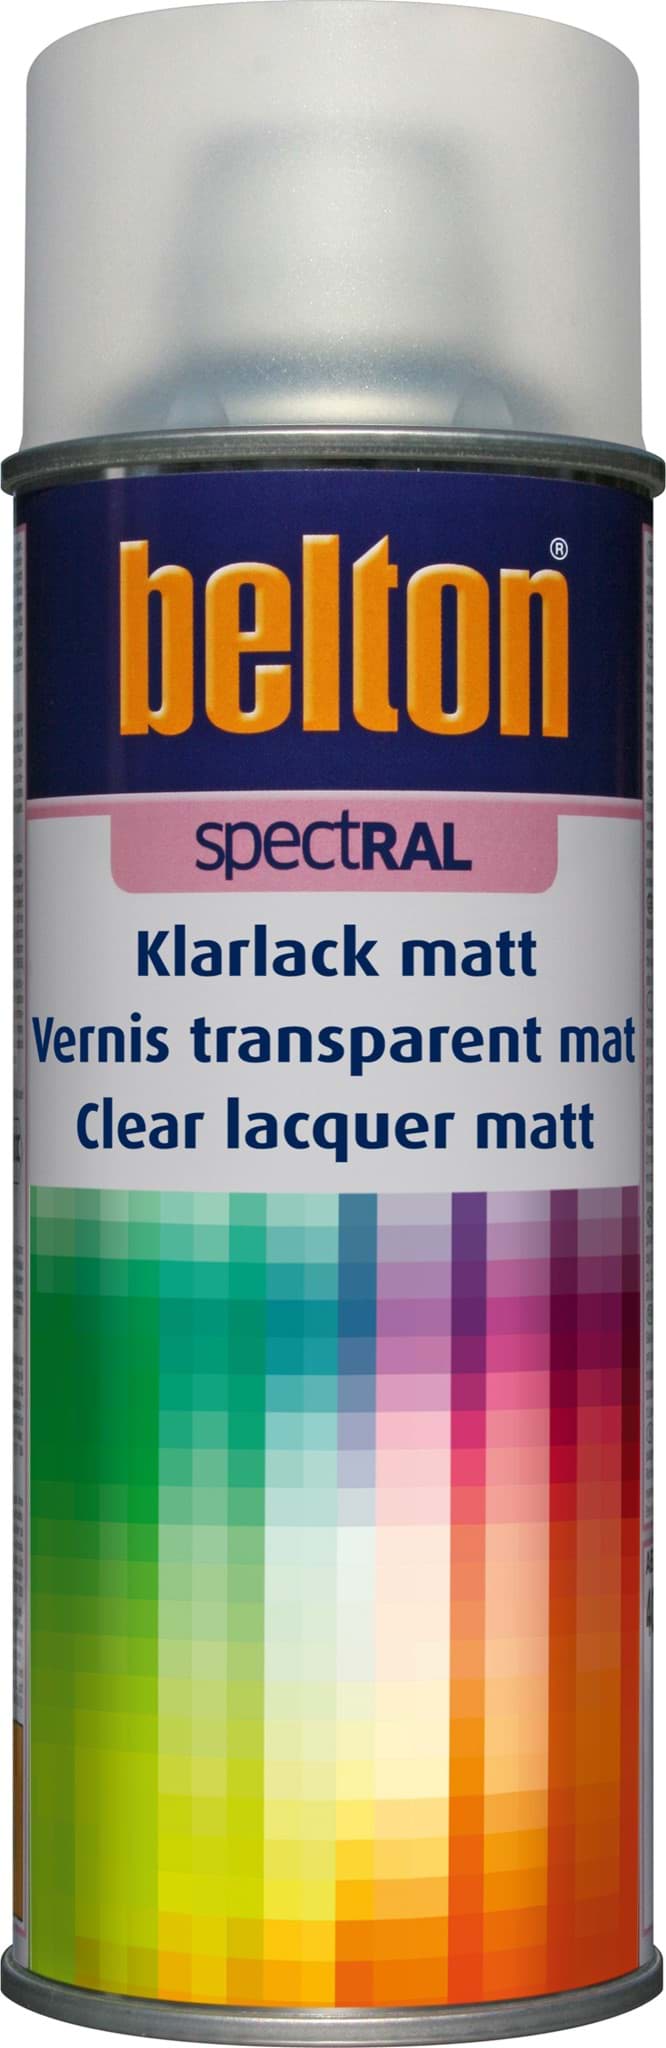 Изображение Belton RAL Spectral Klarlack matt 400ml Lackspray